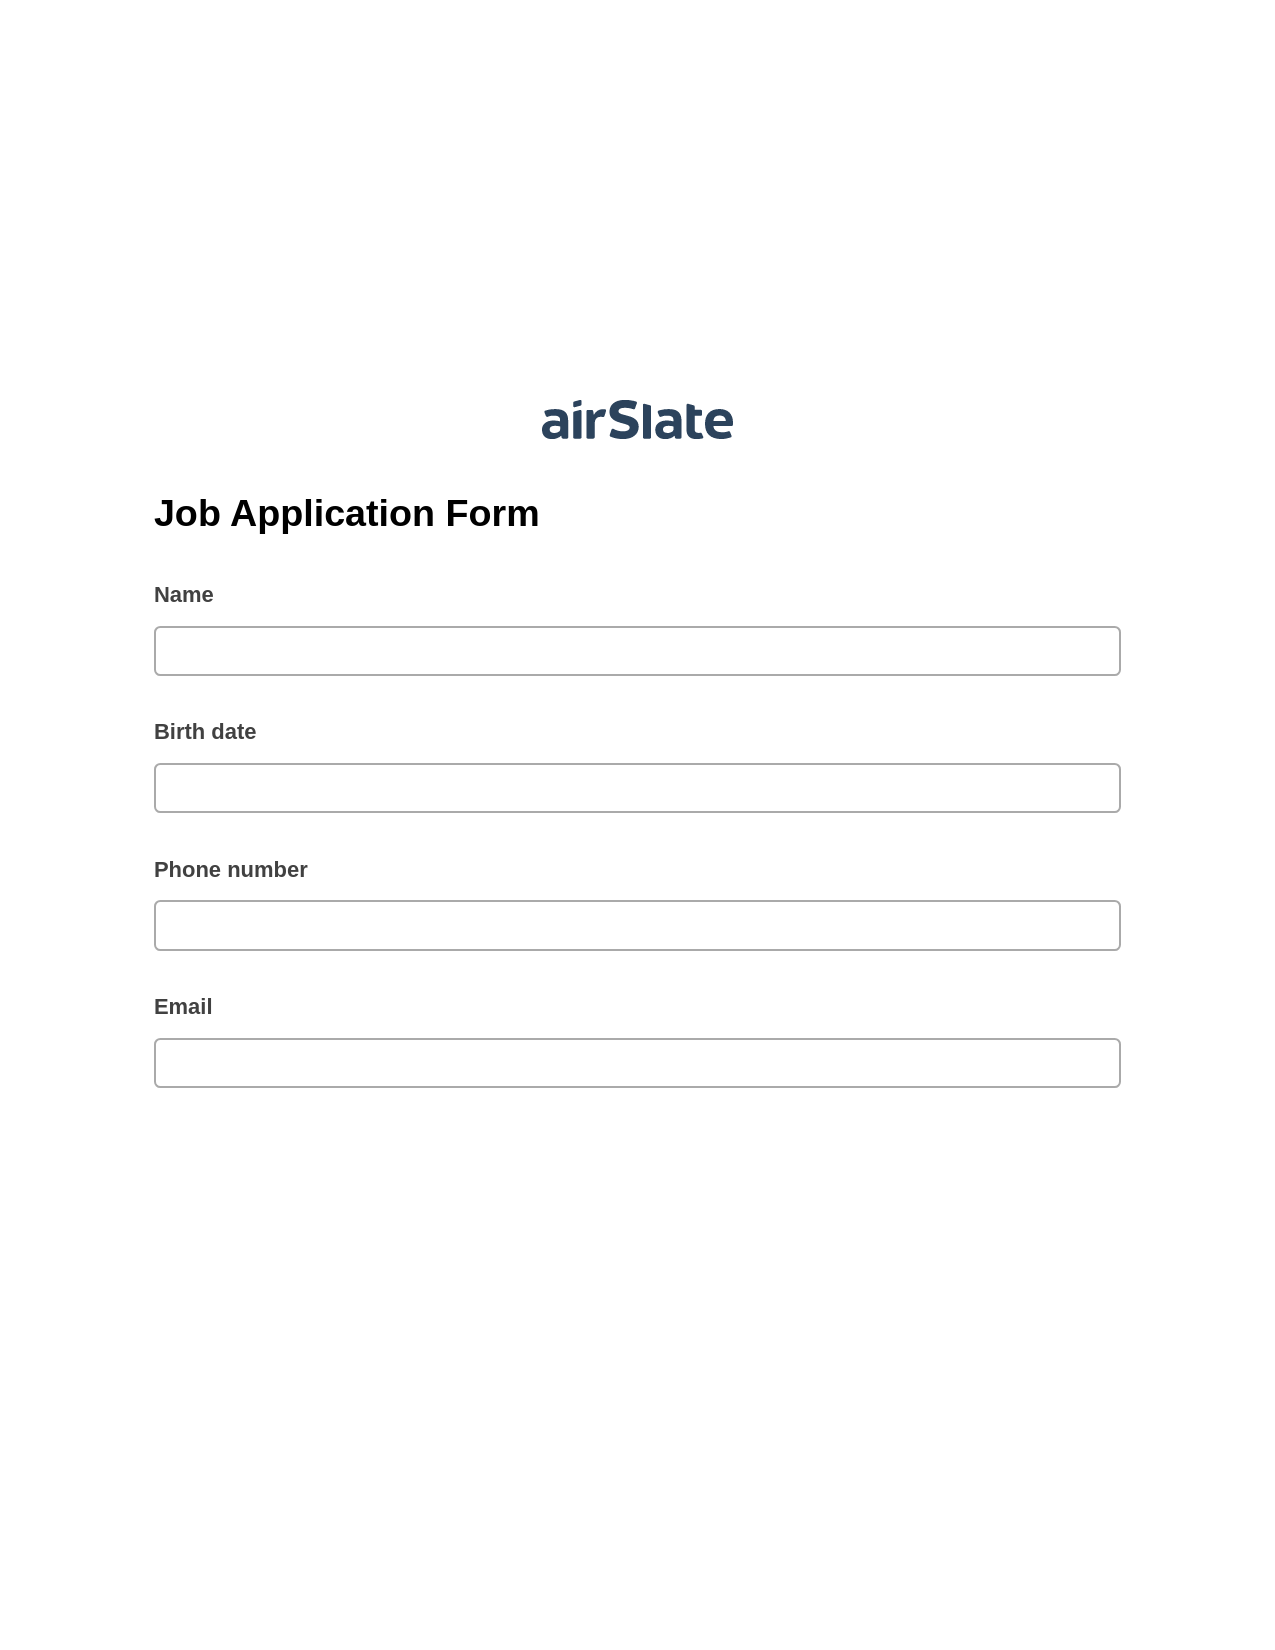 Multirole Job Application Form Pre-fill Document Bot, Pre-fill with Custom Data Bot, Post-finish Document Bot